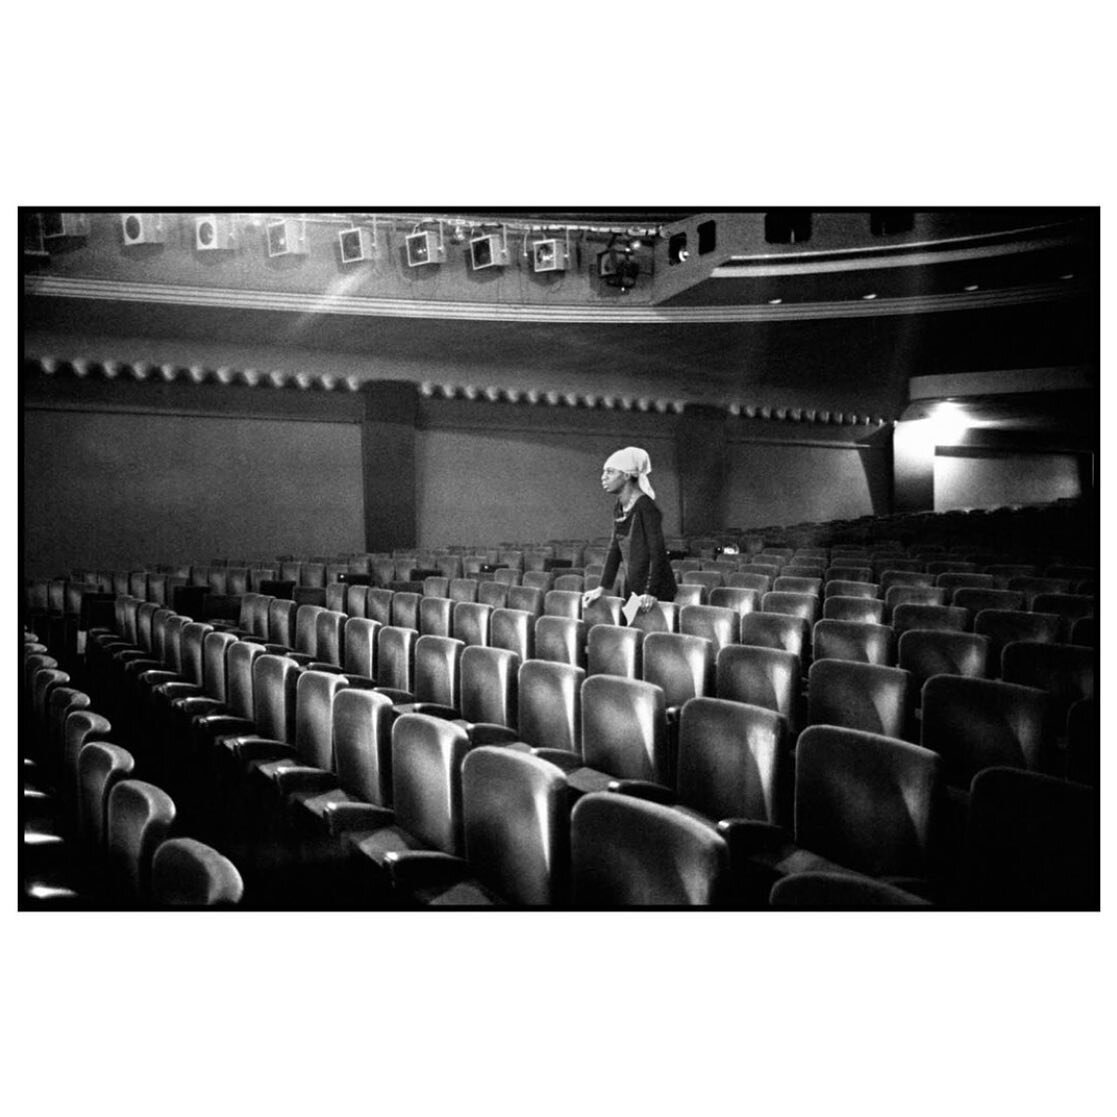 -
PHOTO: FRANCE. Paris. 9th arrondissement. Olympia Concert Hall. The American singer Nina SIMONE. Thursday, March 25th 1969.
&copy;Guy le Querrec /#MagnumPhotos
.
#guylequerrec #documentary #photography #photojournalism #magnum #magnumphotos #magnum